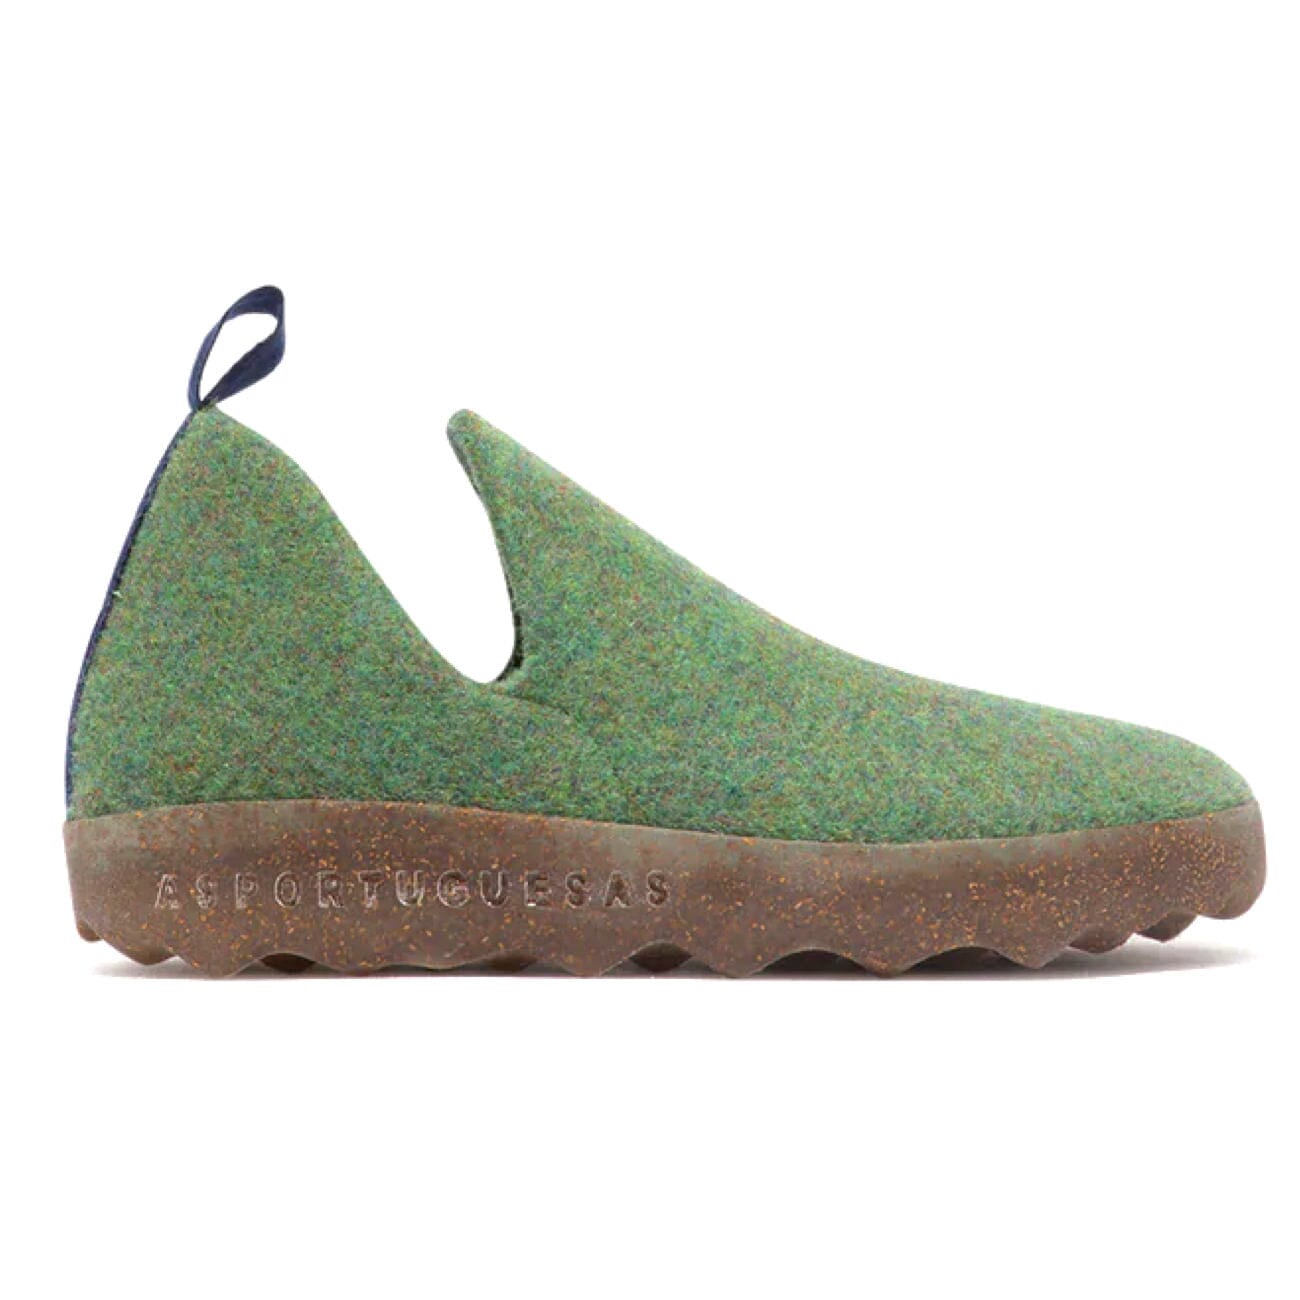 Asportuguesas, AW23-CITY, Moss Felt Green Shoes Asportuguesas Moss 37 